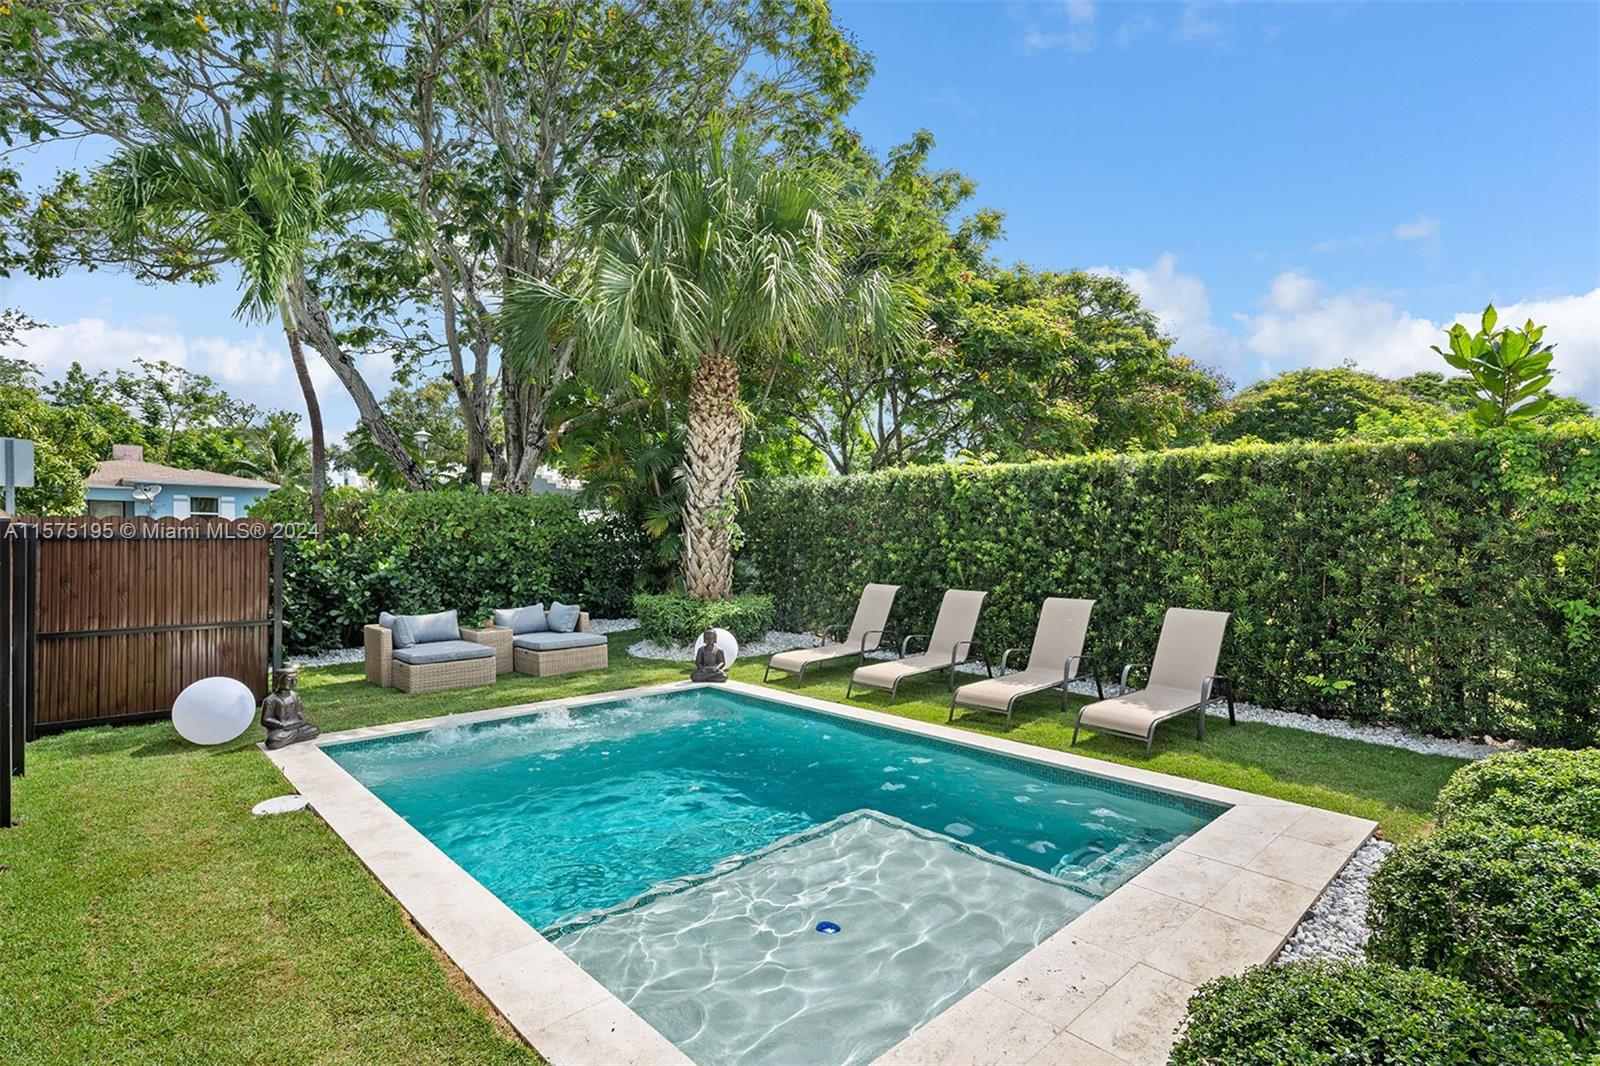 Rental Property at 20 Ne 50th St St, Miami, Broward County, Florida - Bedrooms: 5 
Bathrooms: 3  - $10,500 MO.